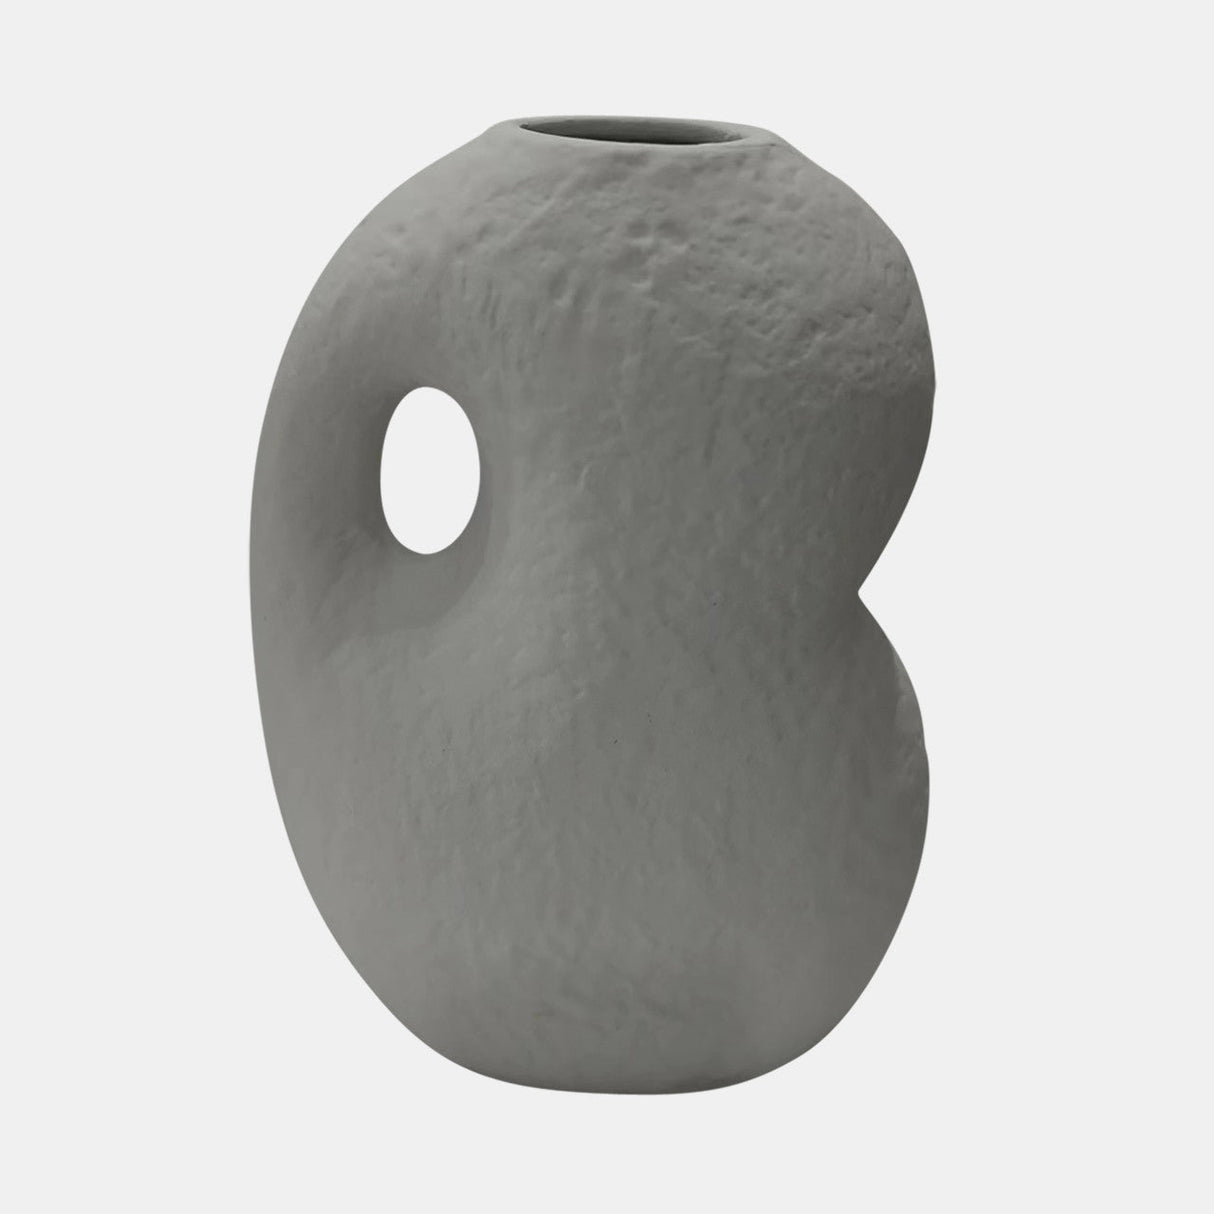 11" B-shape Rough Textured Handle Vase, White